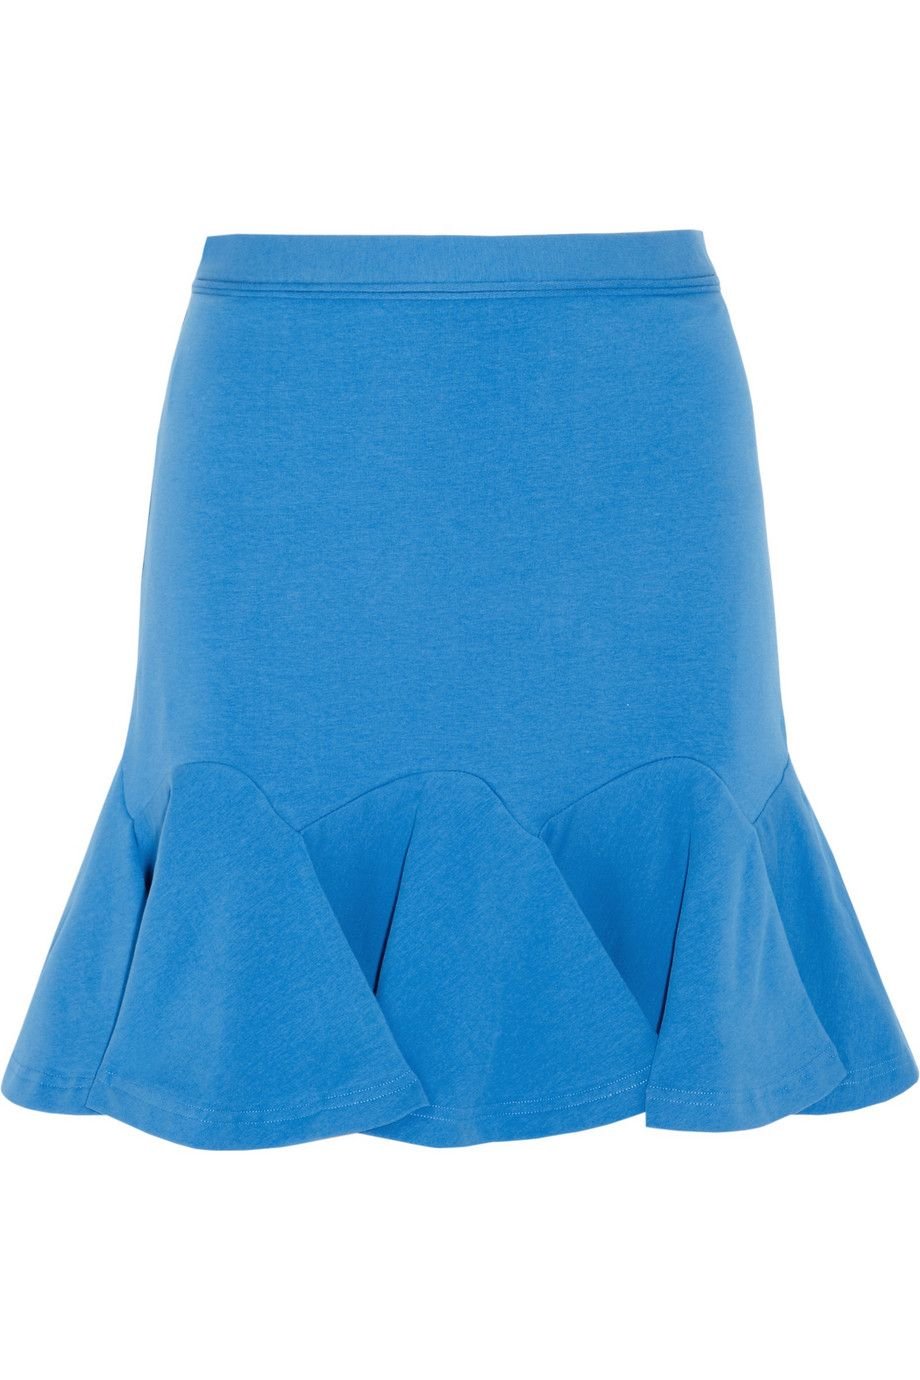 Carven Flared Stretch-Cotton Mini Skirt in Blue.jpg